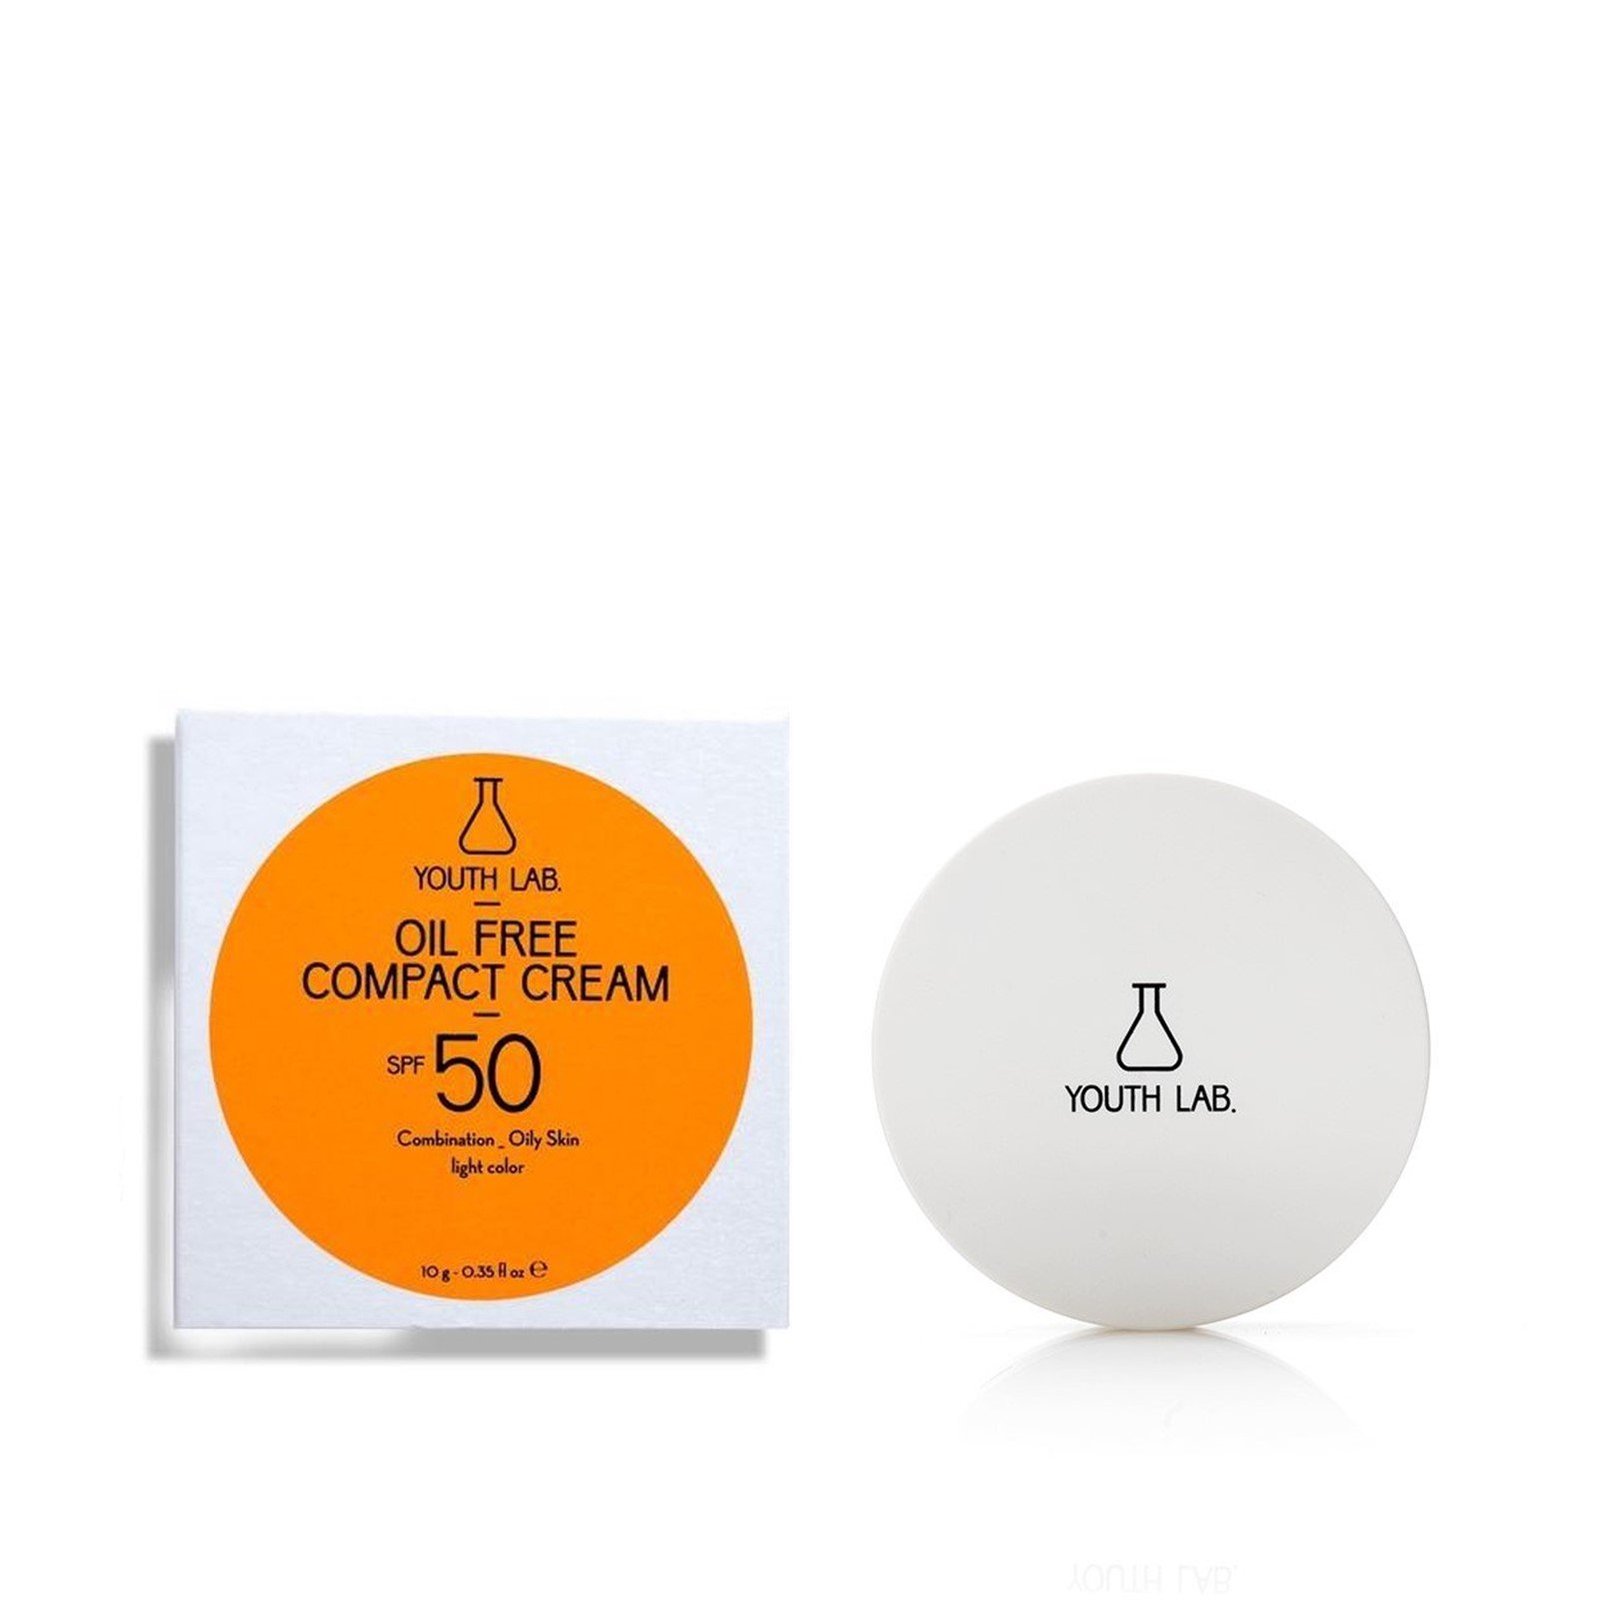 YOUTH LAB Oil Free Compact Cream SPF50 Light 10g (0.35 fl oz)